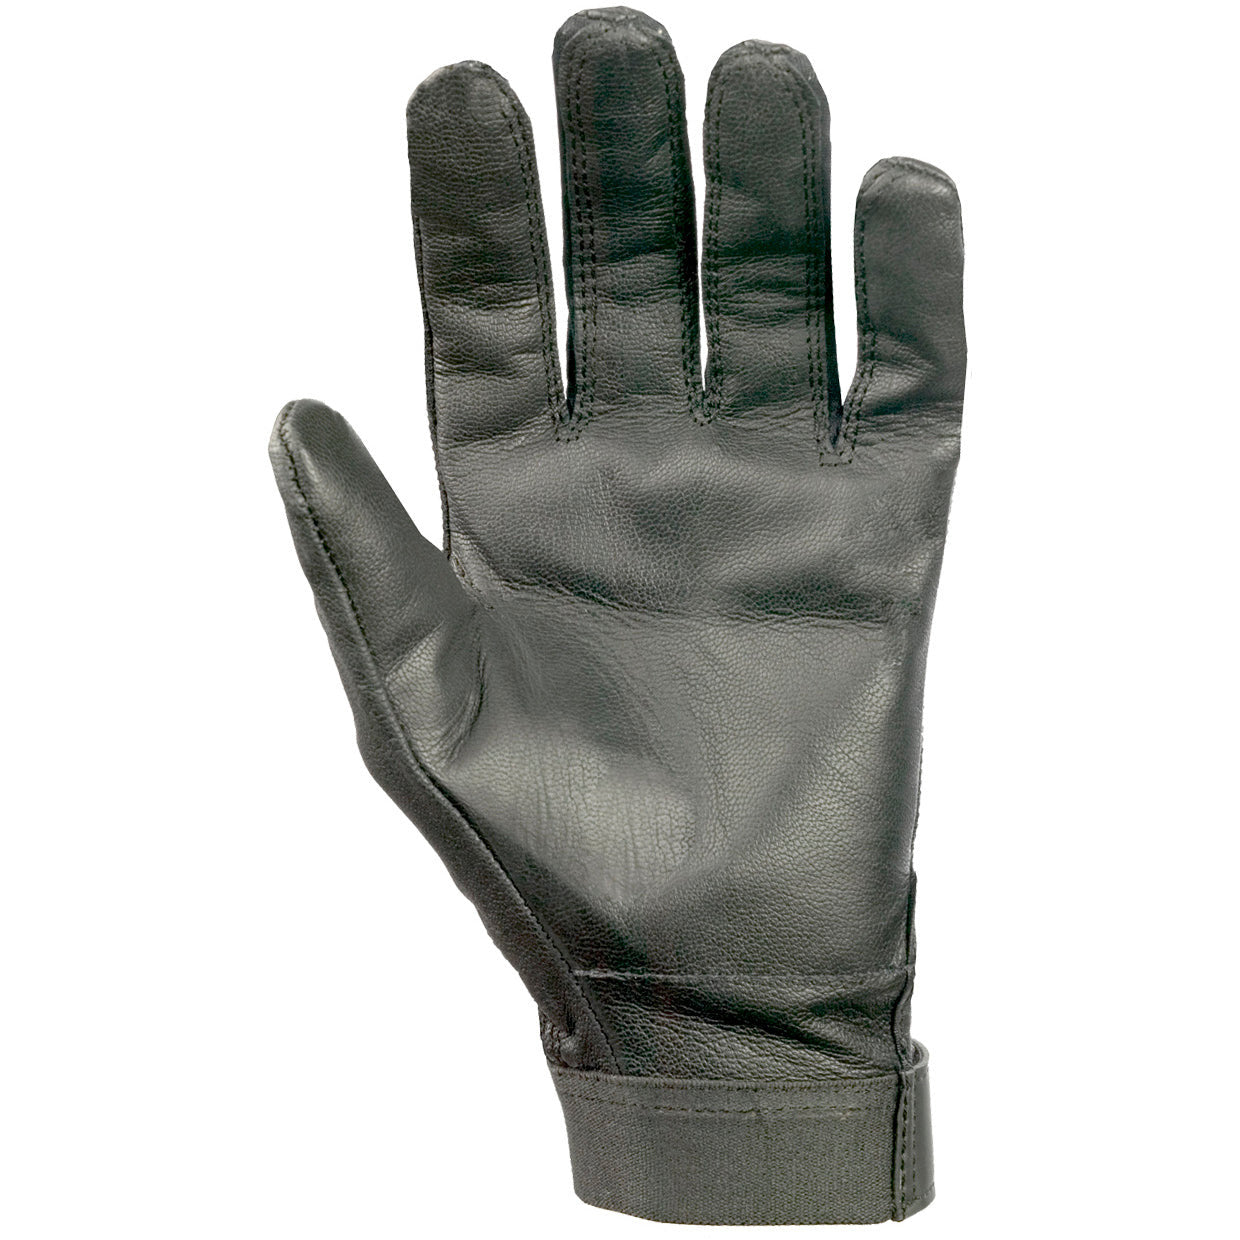 TurtleSkin WorkWear Plus PM 330 Cut Resistant Mechanics Gloves